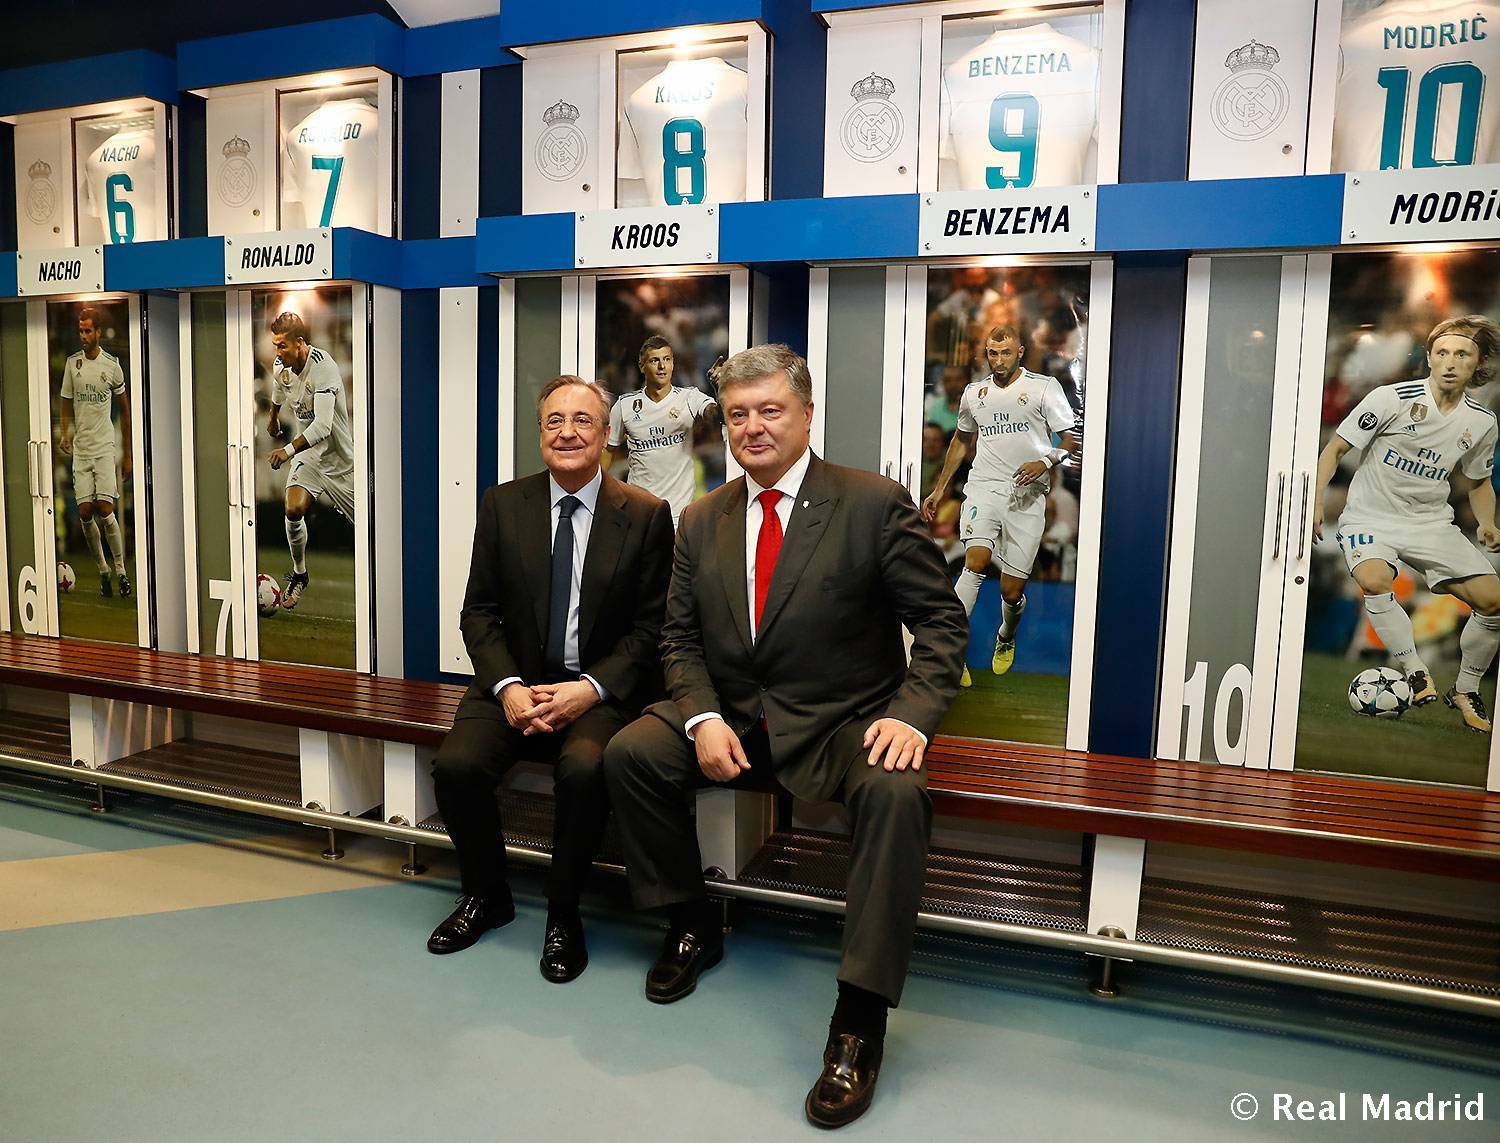 "Poroshenko 1": "Реал" отметил президента Украины - фотофакт